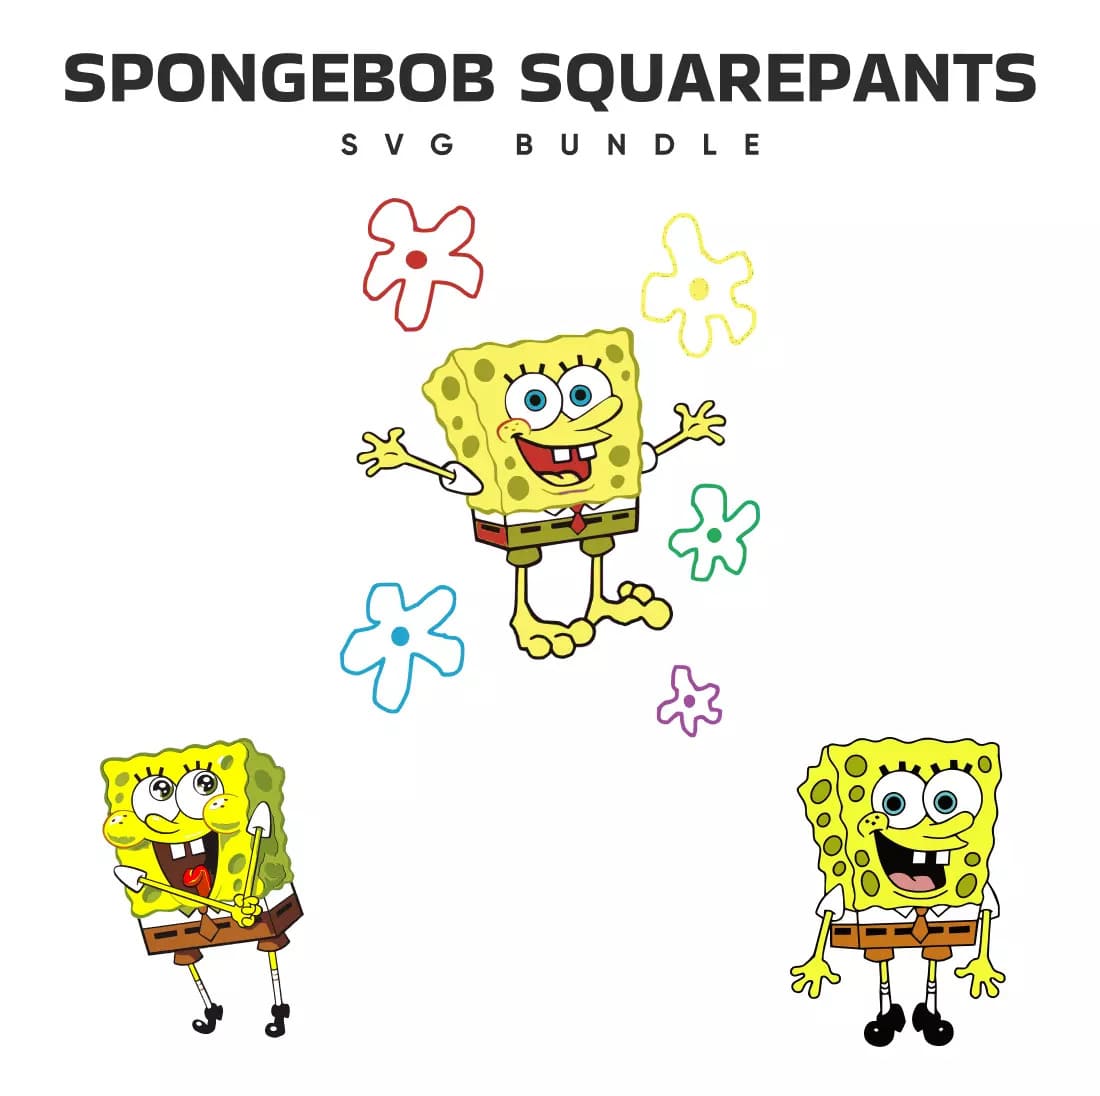 Spongebob Squarepants SVG Bundle Preview.